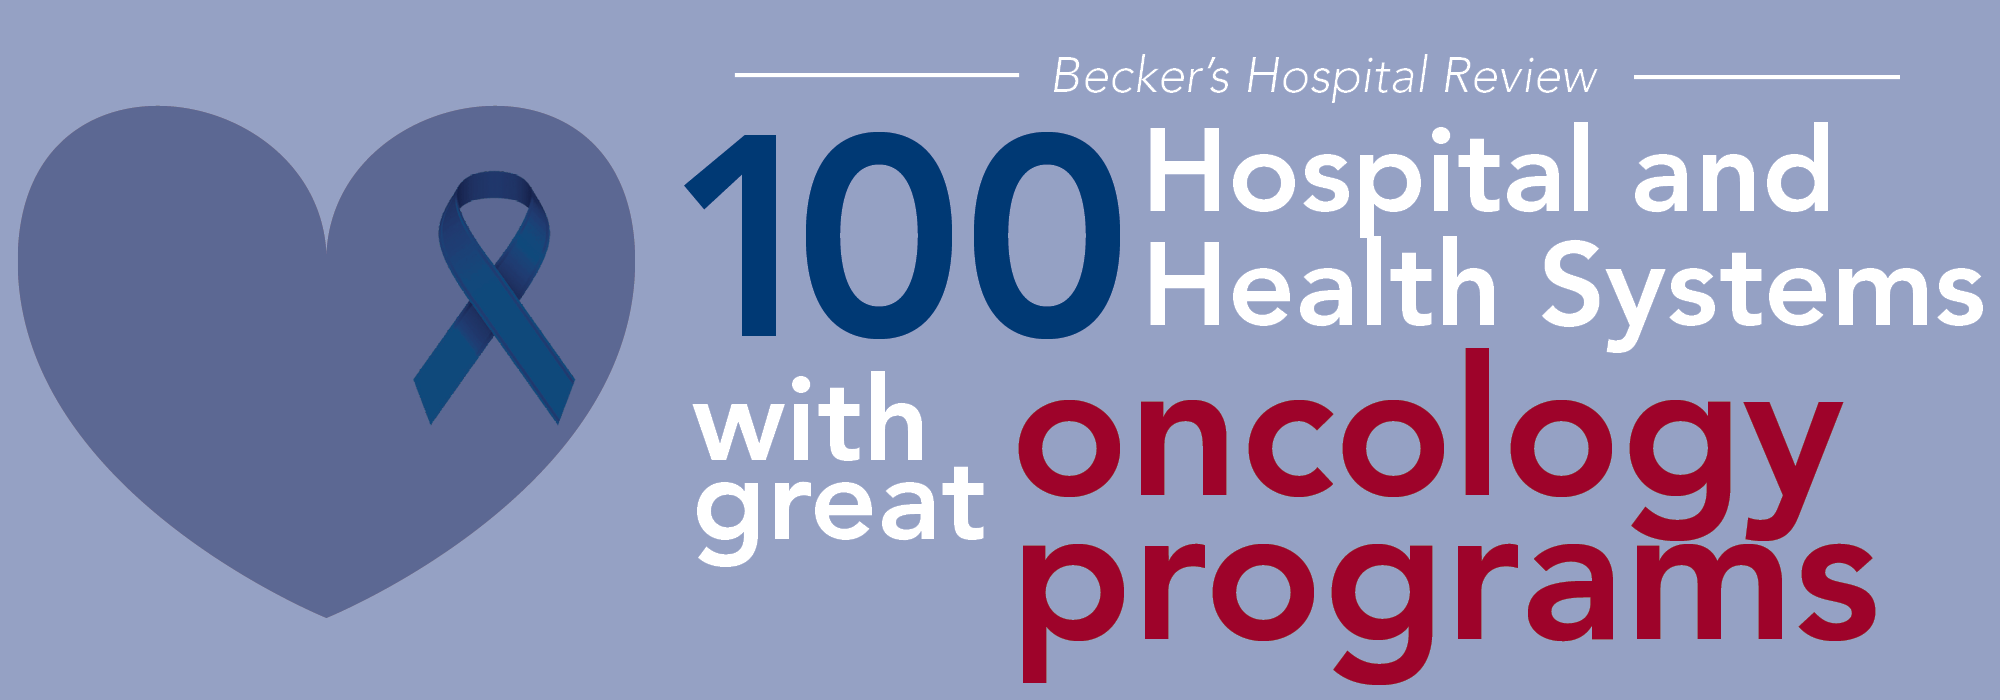 Becker's Hospital Review Logo - NewYork Presbyterian Named To Becker's Hospital Review List Of “100